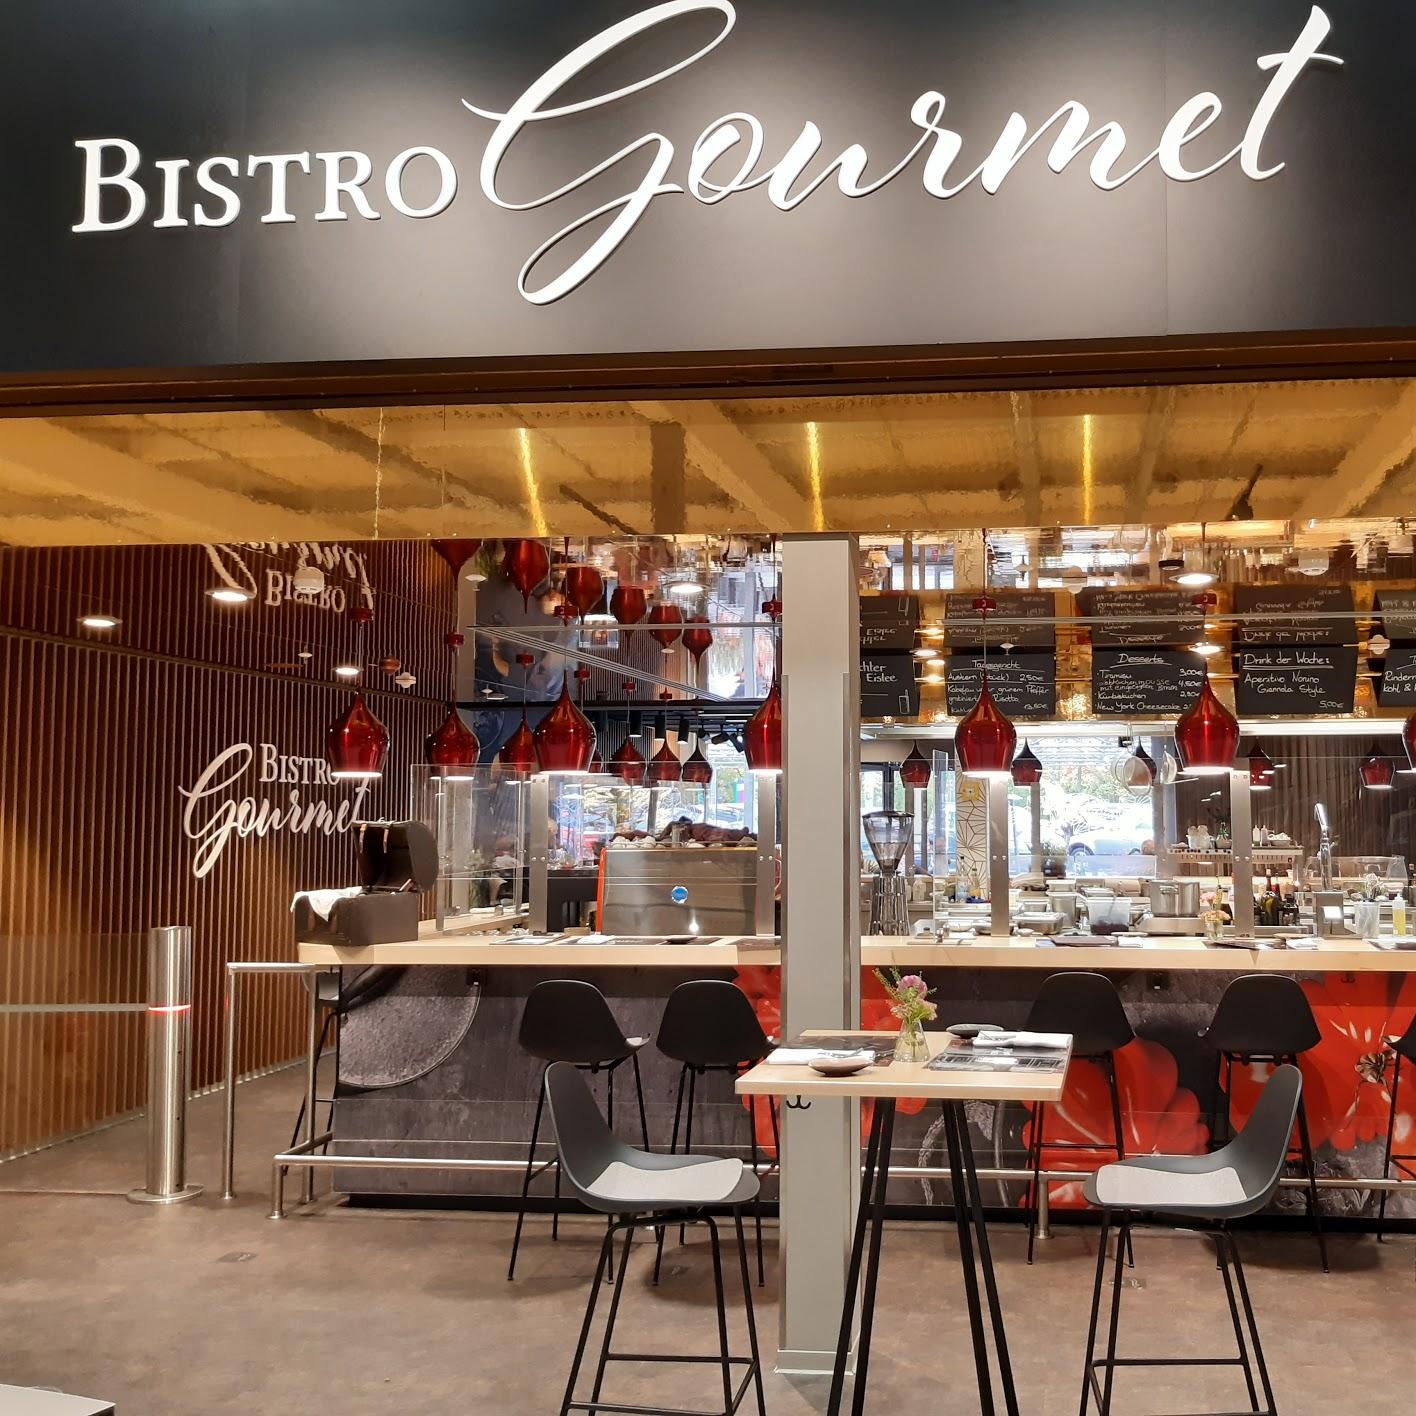 Restaurant "Bistro Gourmet" in Eschborn